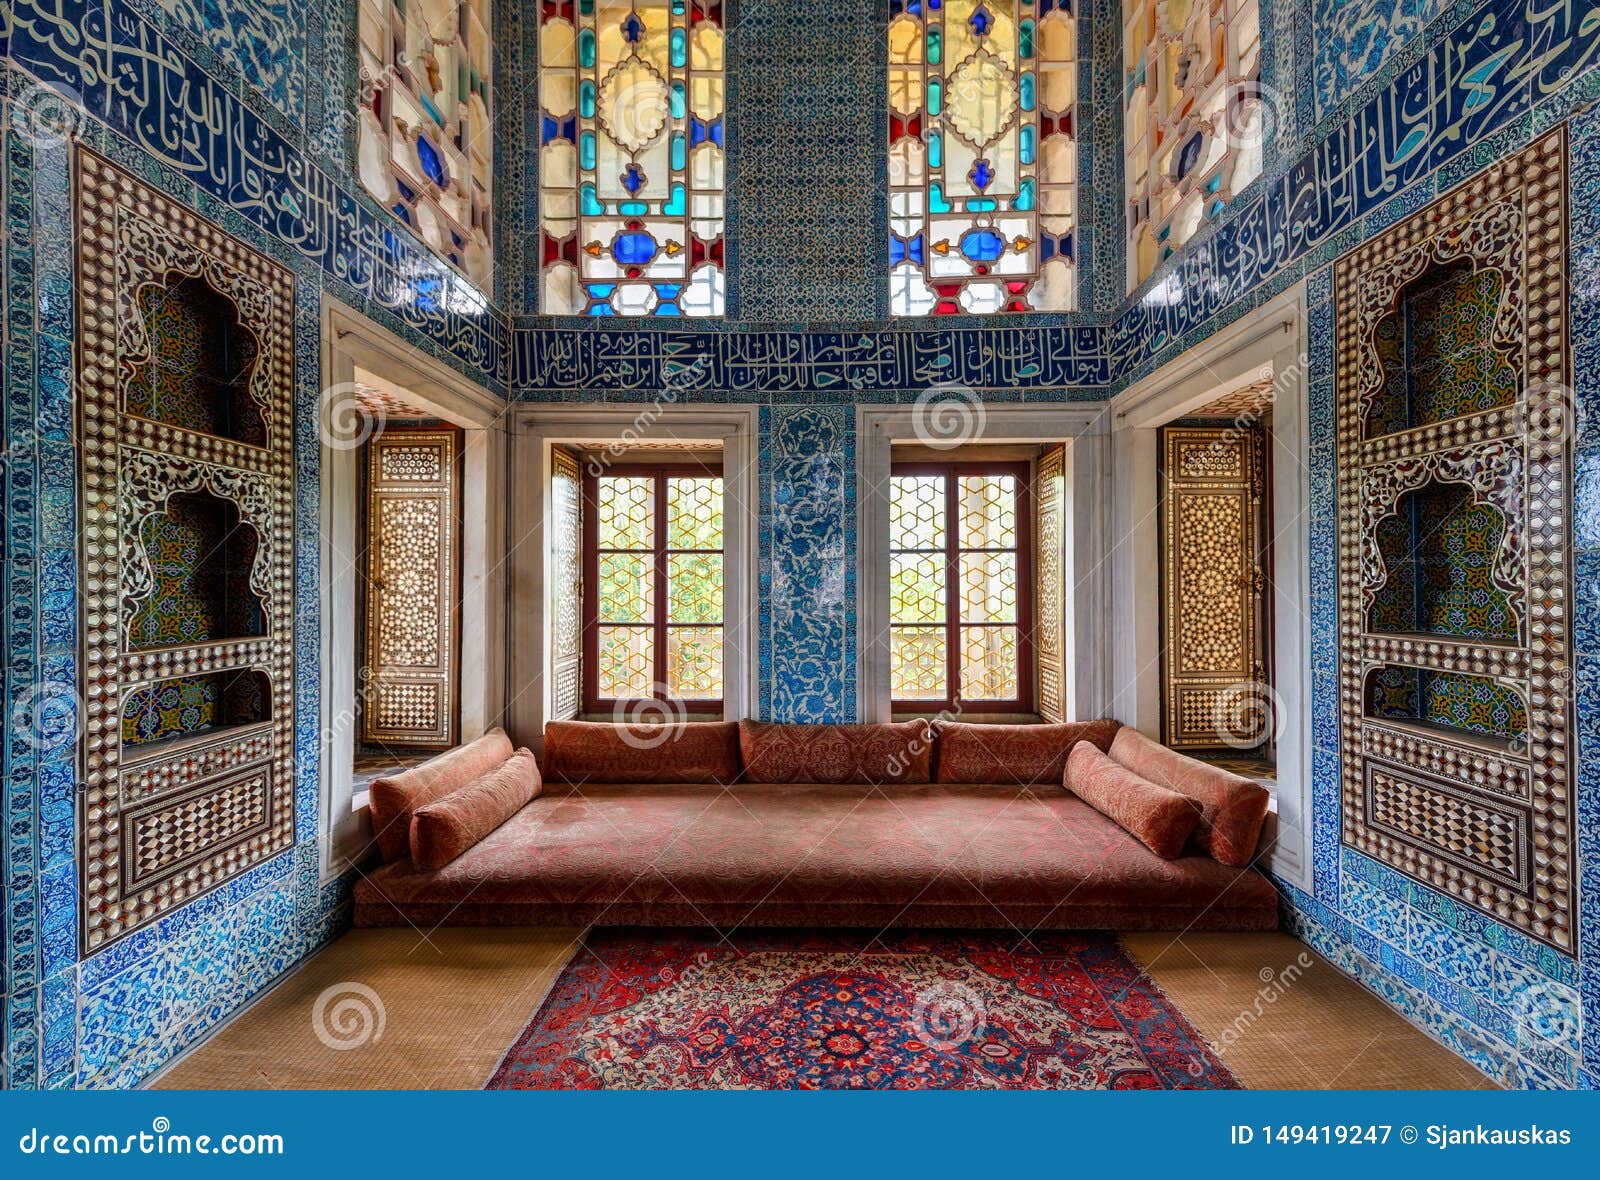 topkapi palace interior, mosaic tiled walls, istanbul turkey